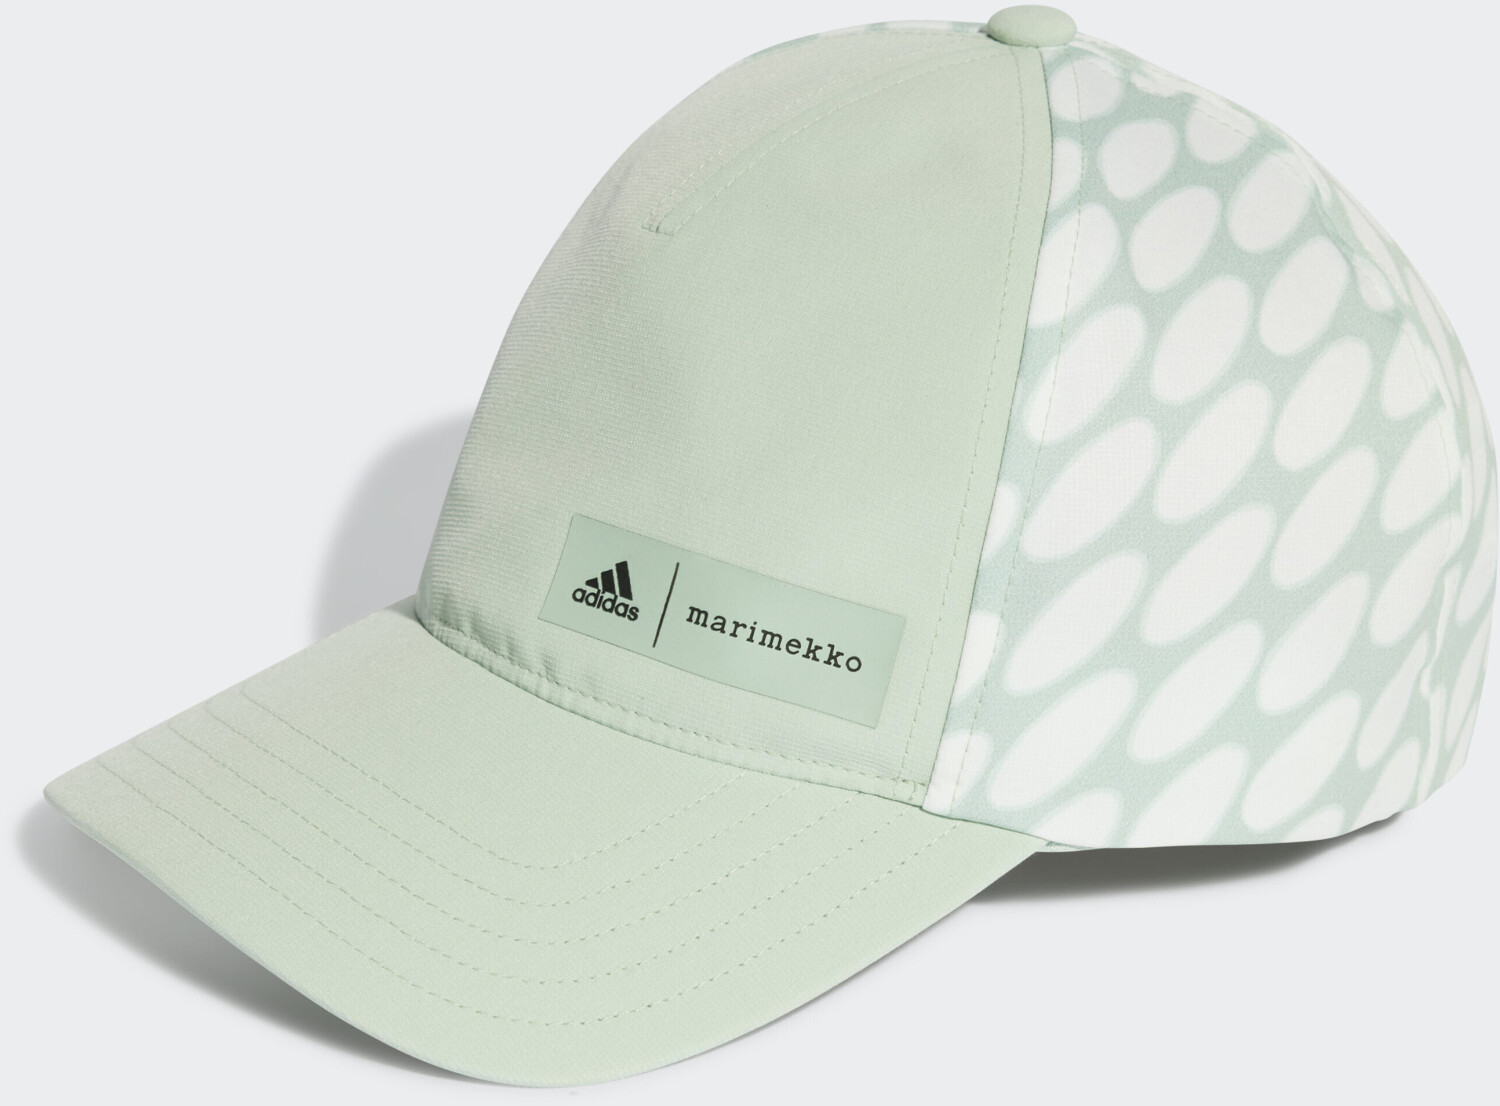 Adidas x Marimekko Aeroready Baseball Kappe (HT3901) green tint/black ab  28,00 € | Preisvergleich bei